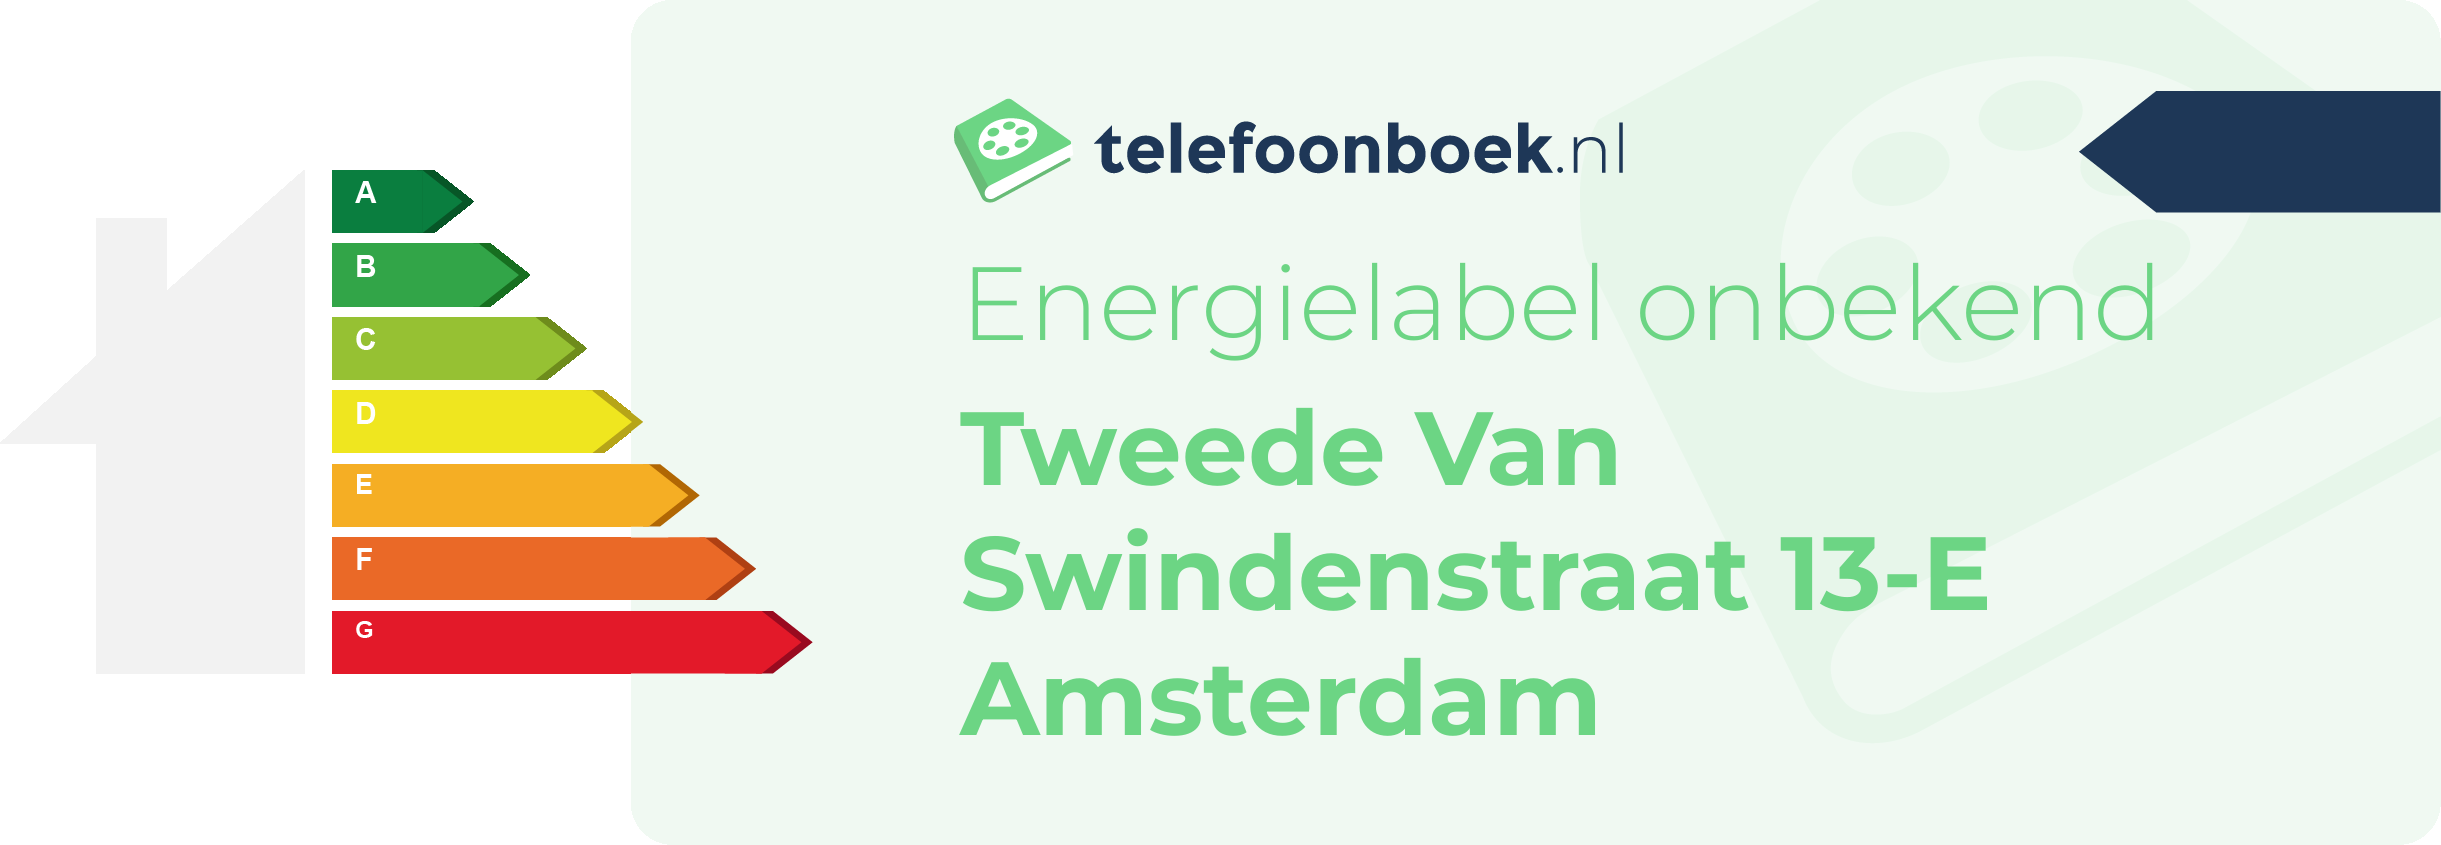 Energielabel Tweede Van Swindenstraat 13-E Amsterdam